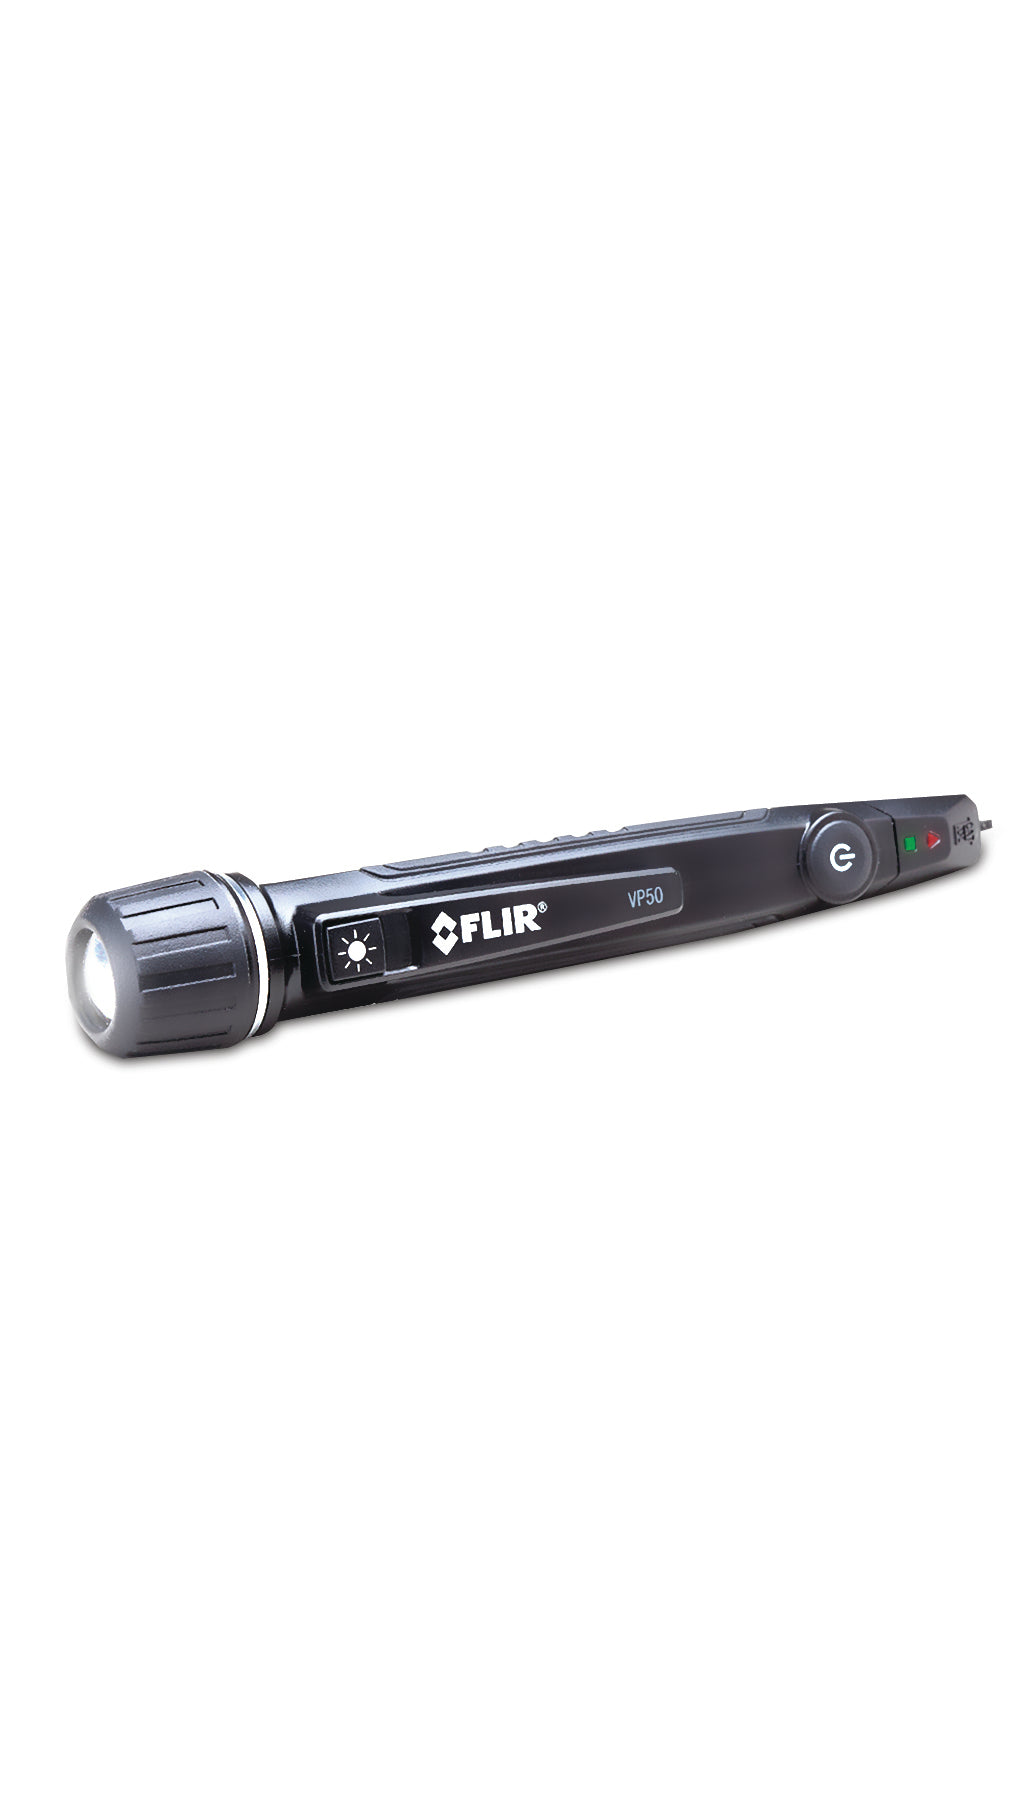 FLIR VP50 Non-Contact Voltage Detector w/ Flashlight FLIR VP50